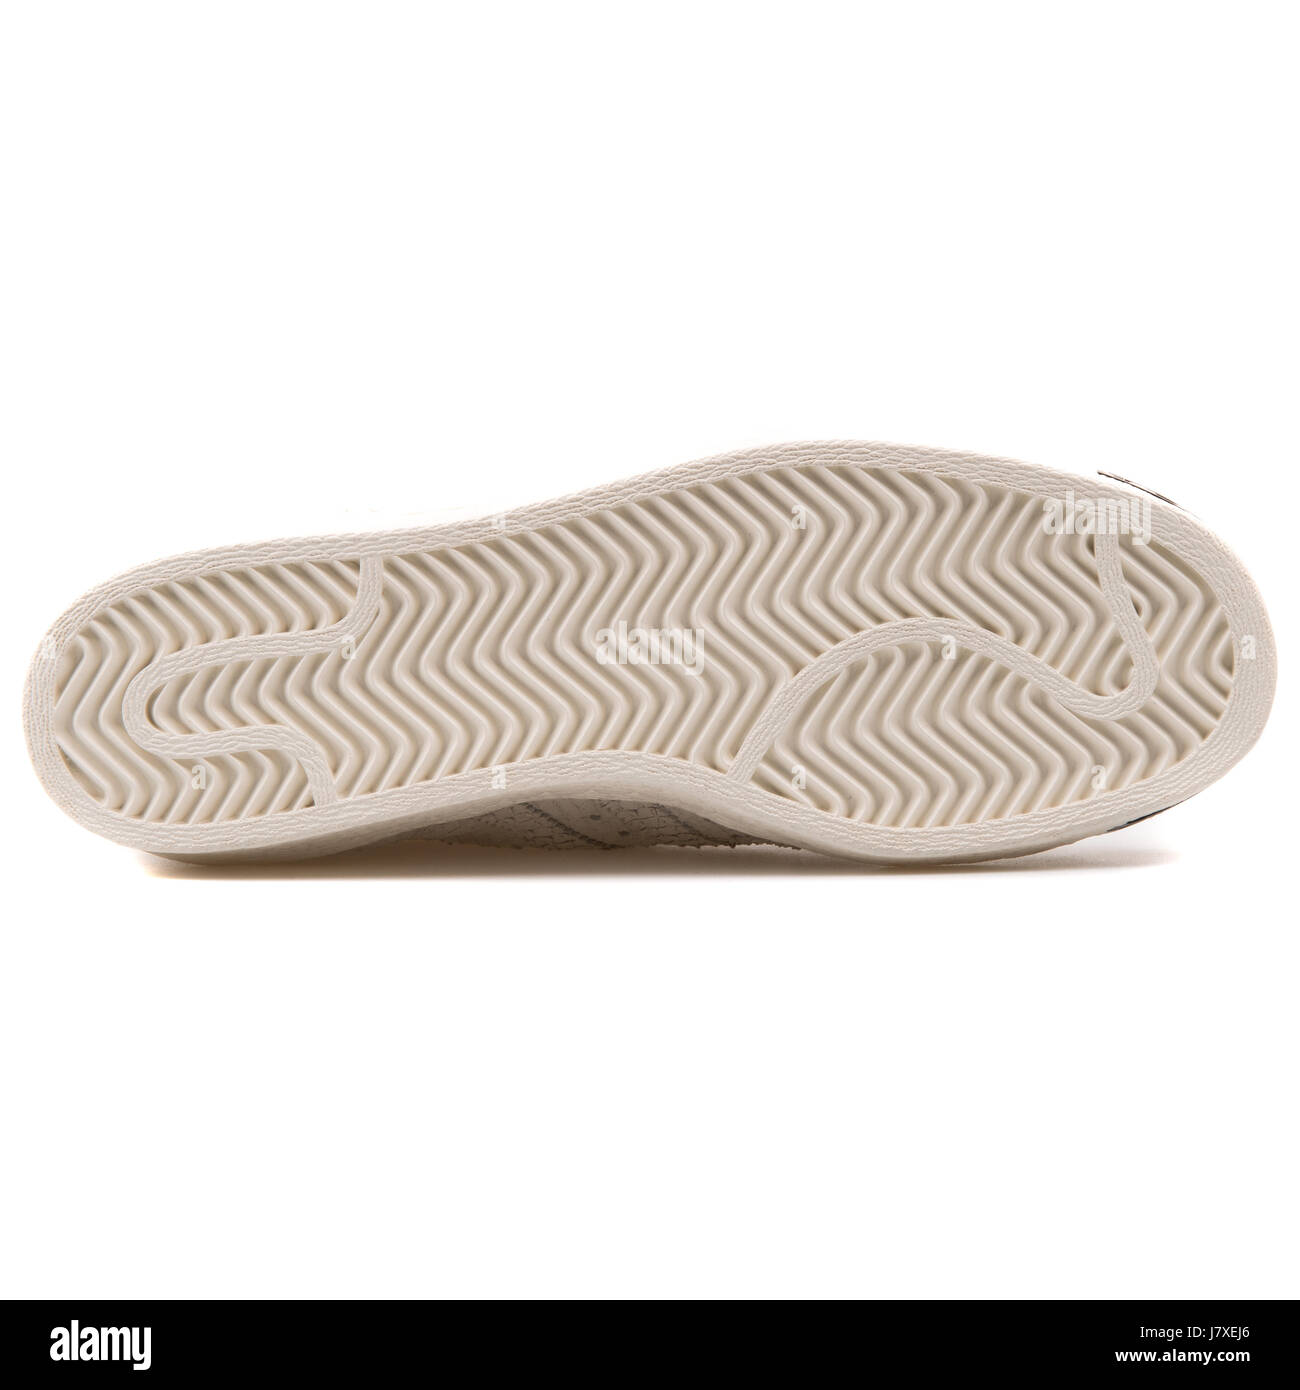 Adidas Superstar 80S en métal W Women's Classic en cuir blanc avec motif peau  de serpent Sneakers - S82483 Photo Stock - Alamy